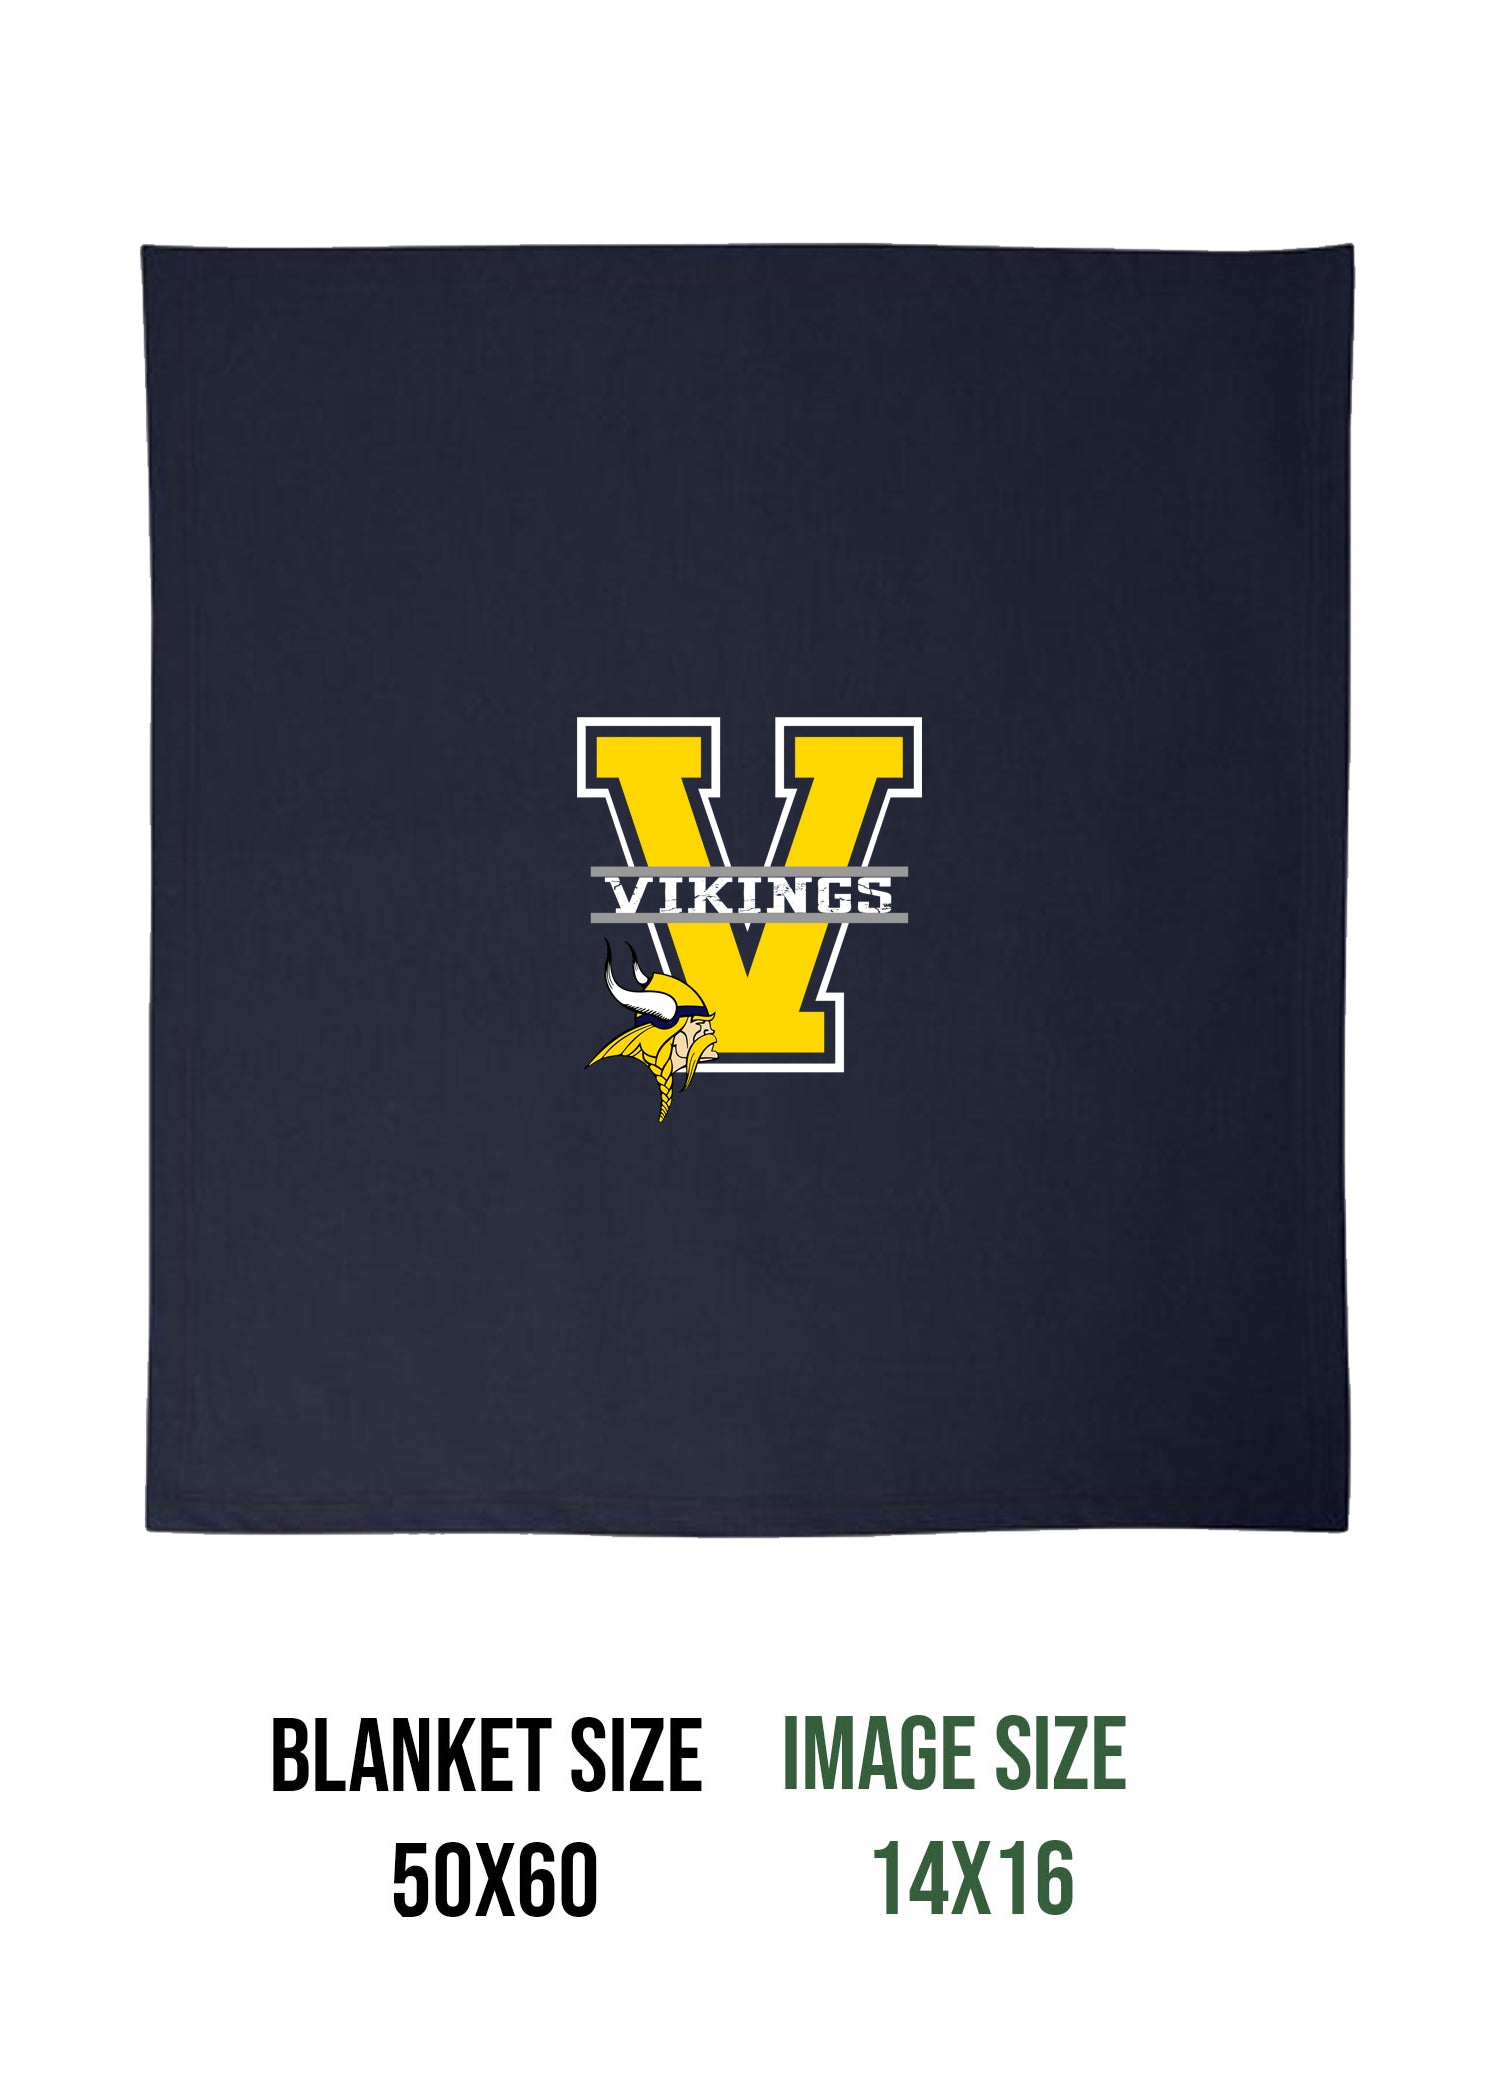 Vernon Design 24 Blanket